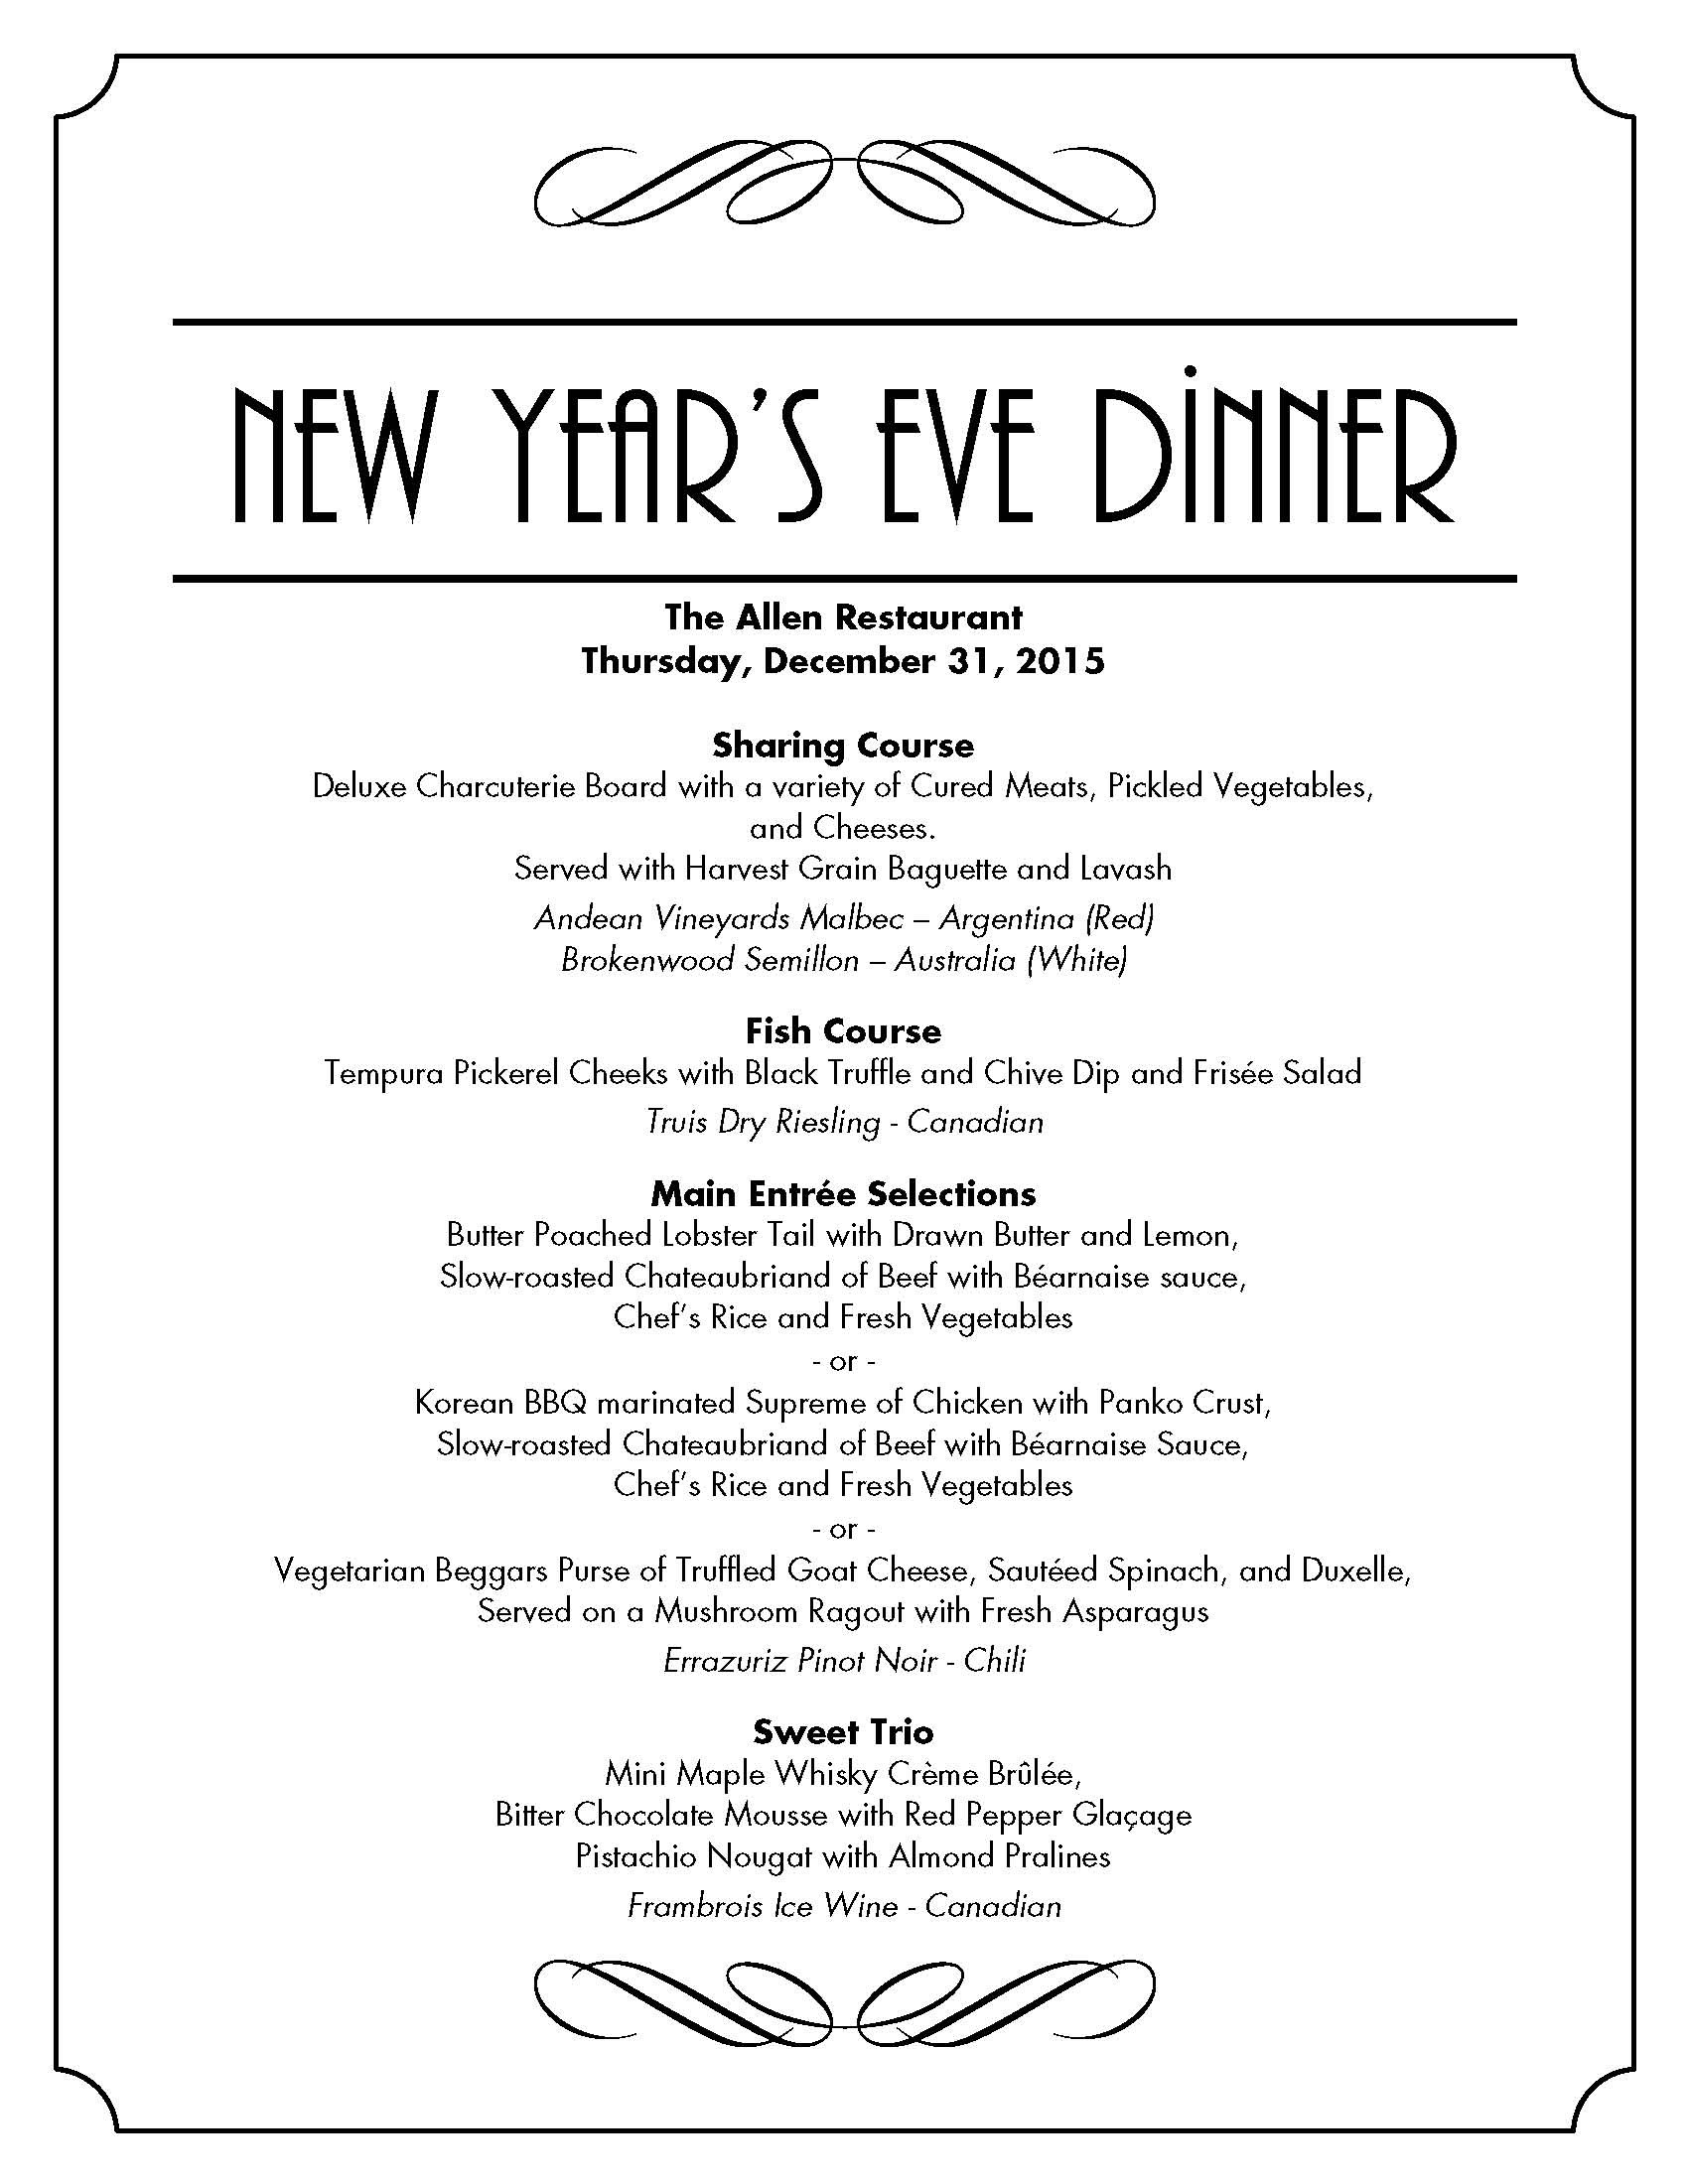 New Year Dinner Menu
 New Years Eve Dinner at The Allen Restaurant